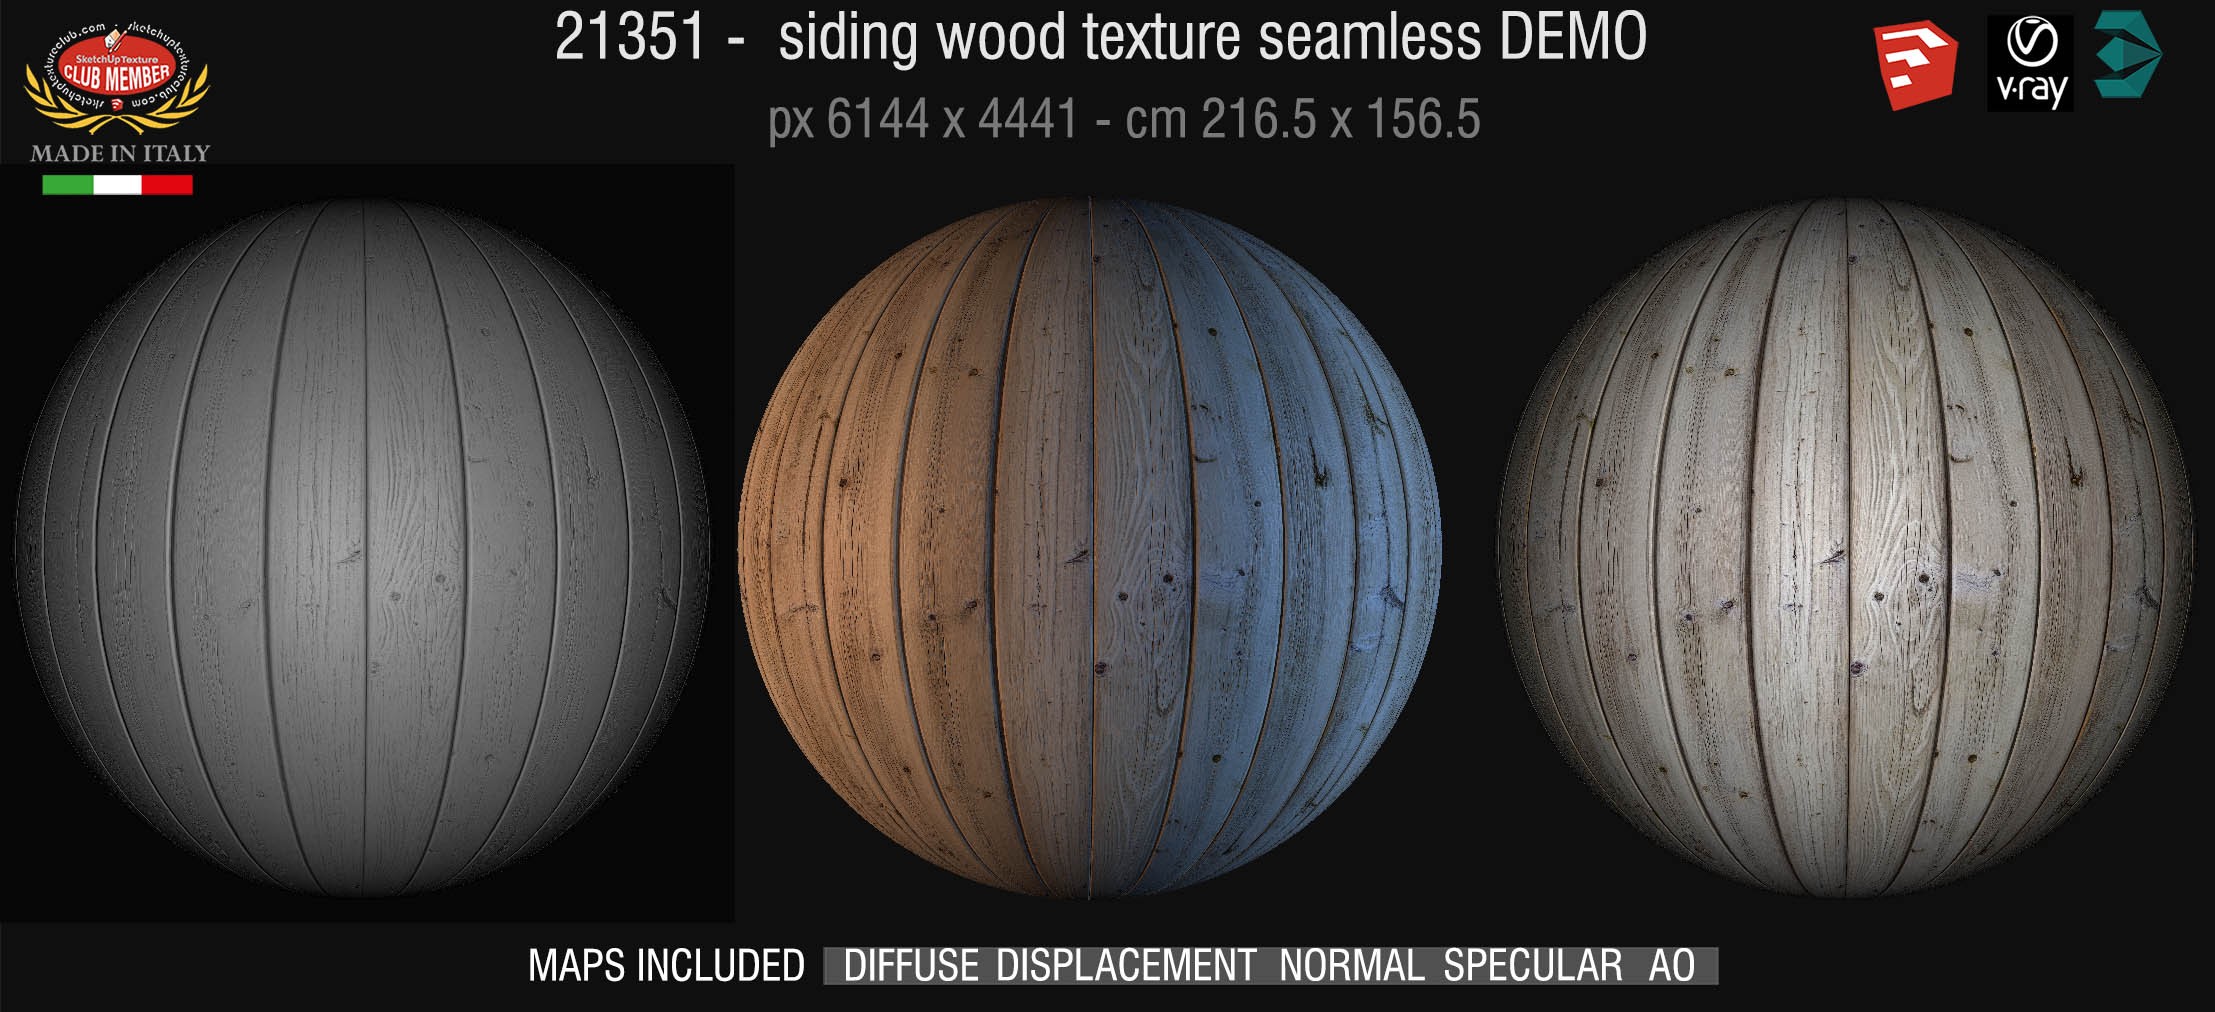 21351 HR siding wood texture + maps DEMO